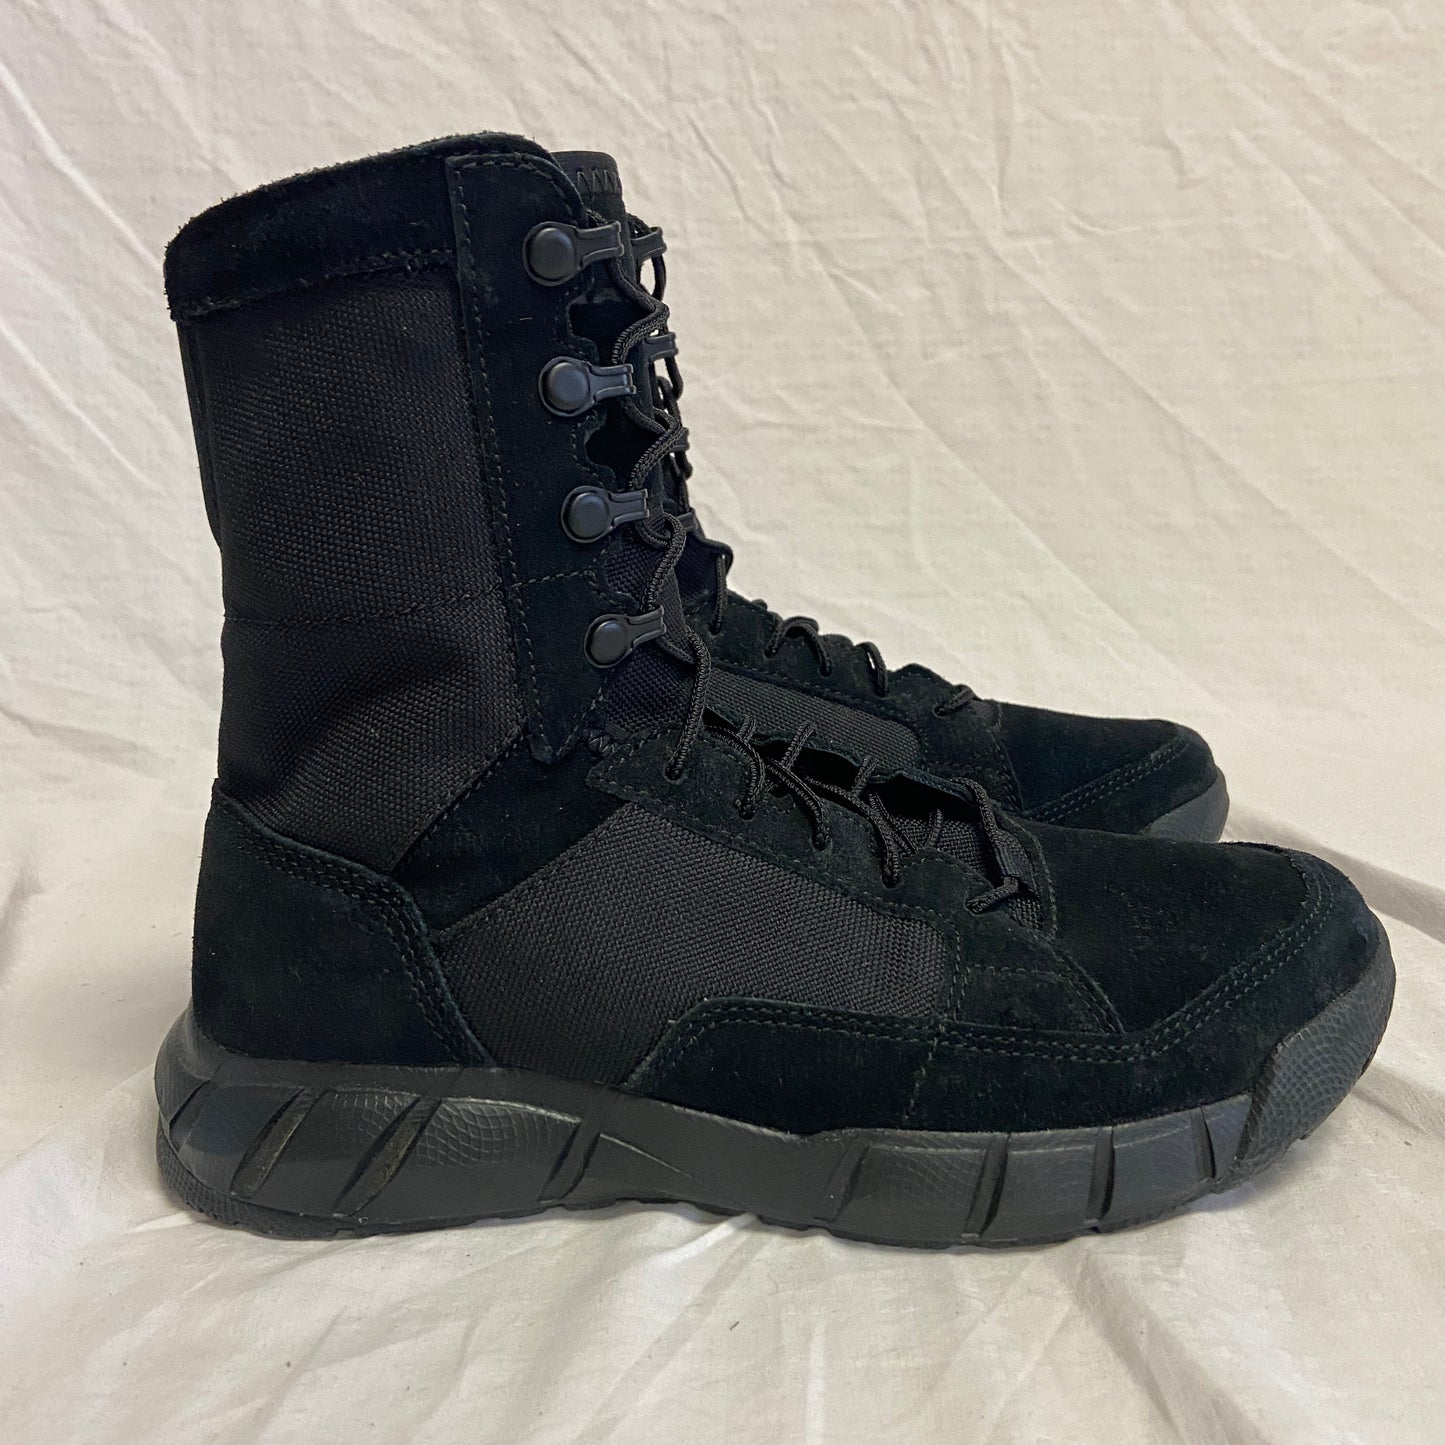 Oakley Light Assault 2 Boots Blackout Size 4.5 (Open Box) - ExtremeSupply.com